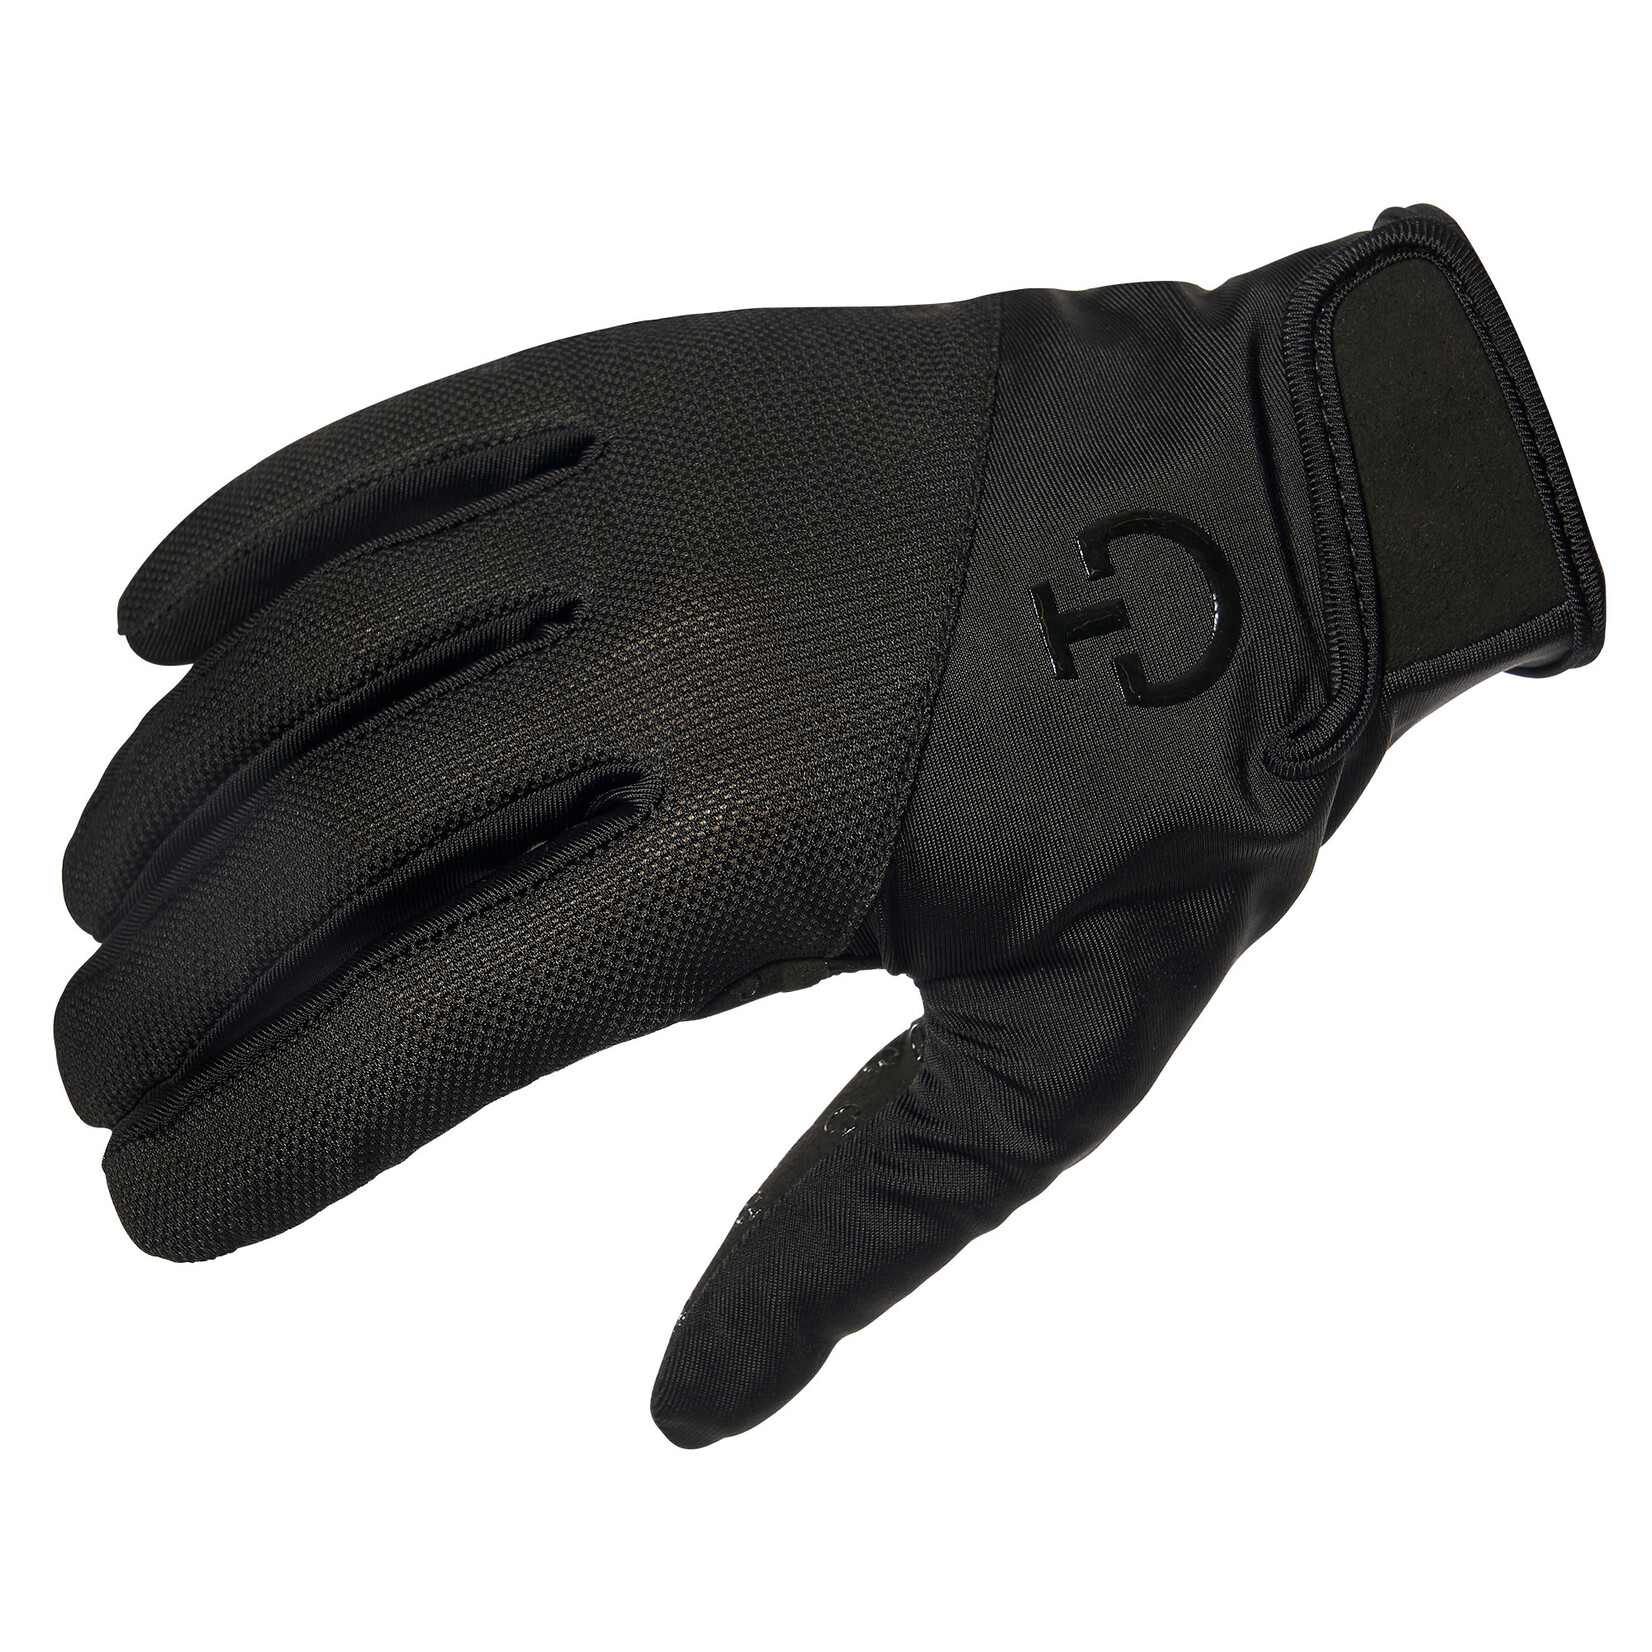 Cavalleria Toscana Cavalleria Toscana mesh gloves black